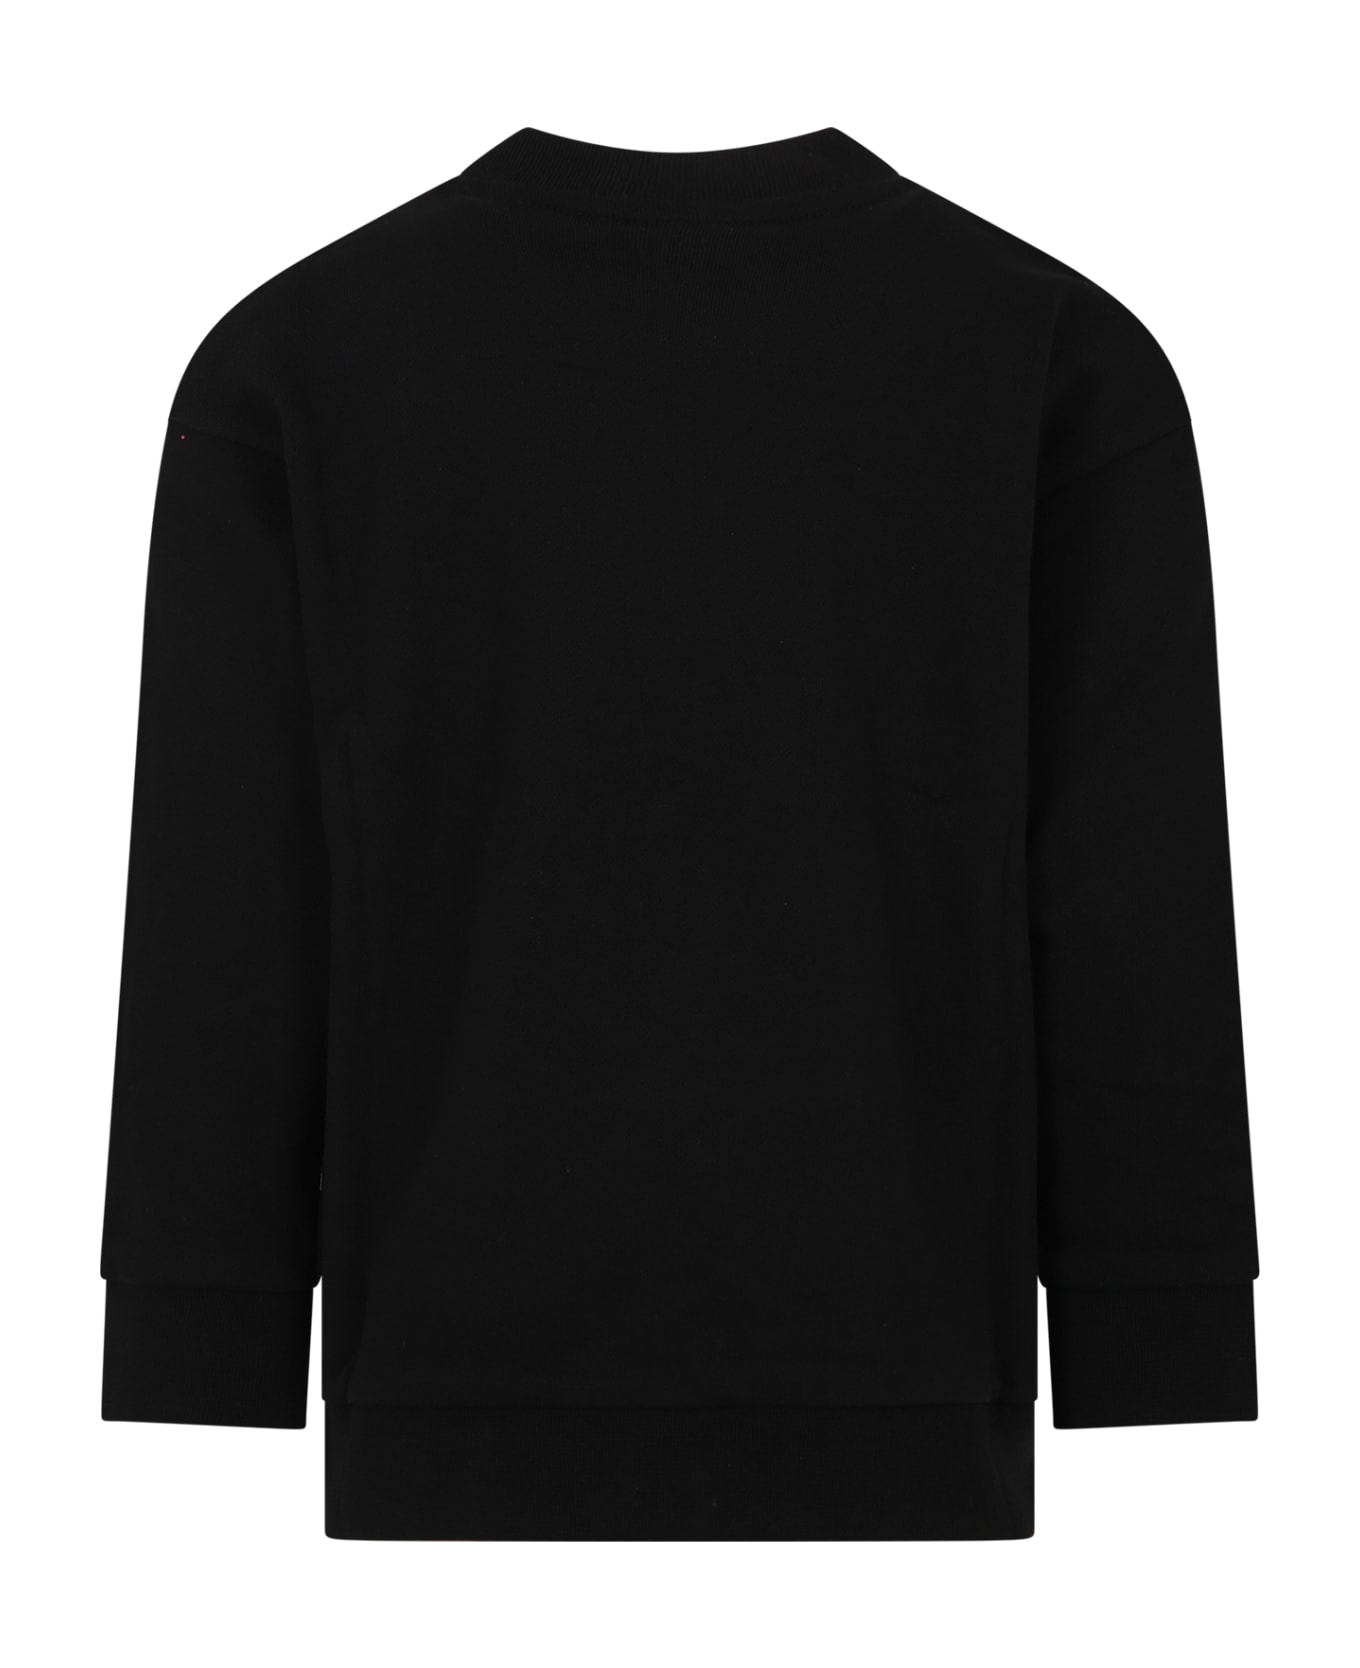 Fendi Black Sweatshirt For Kids With Logo - Black